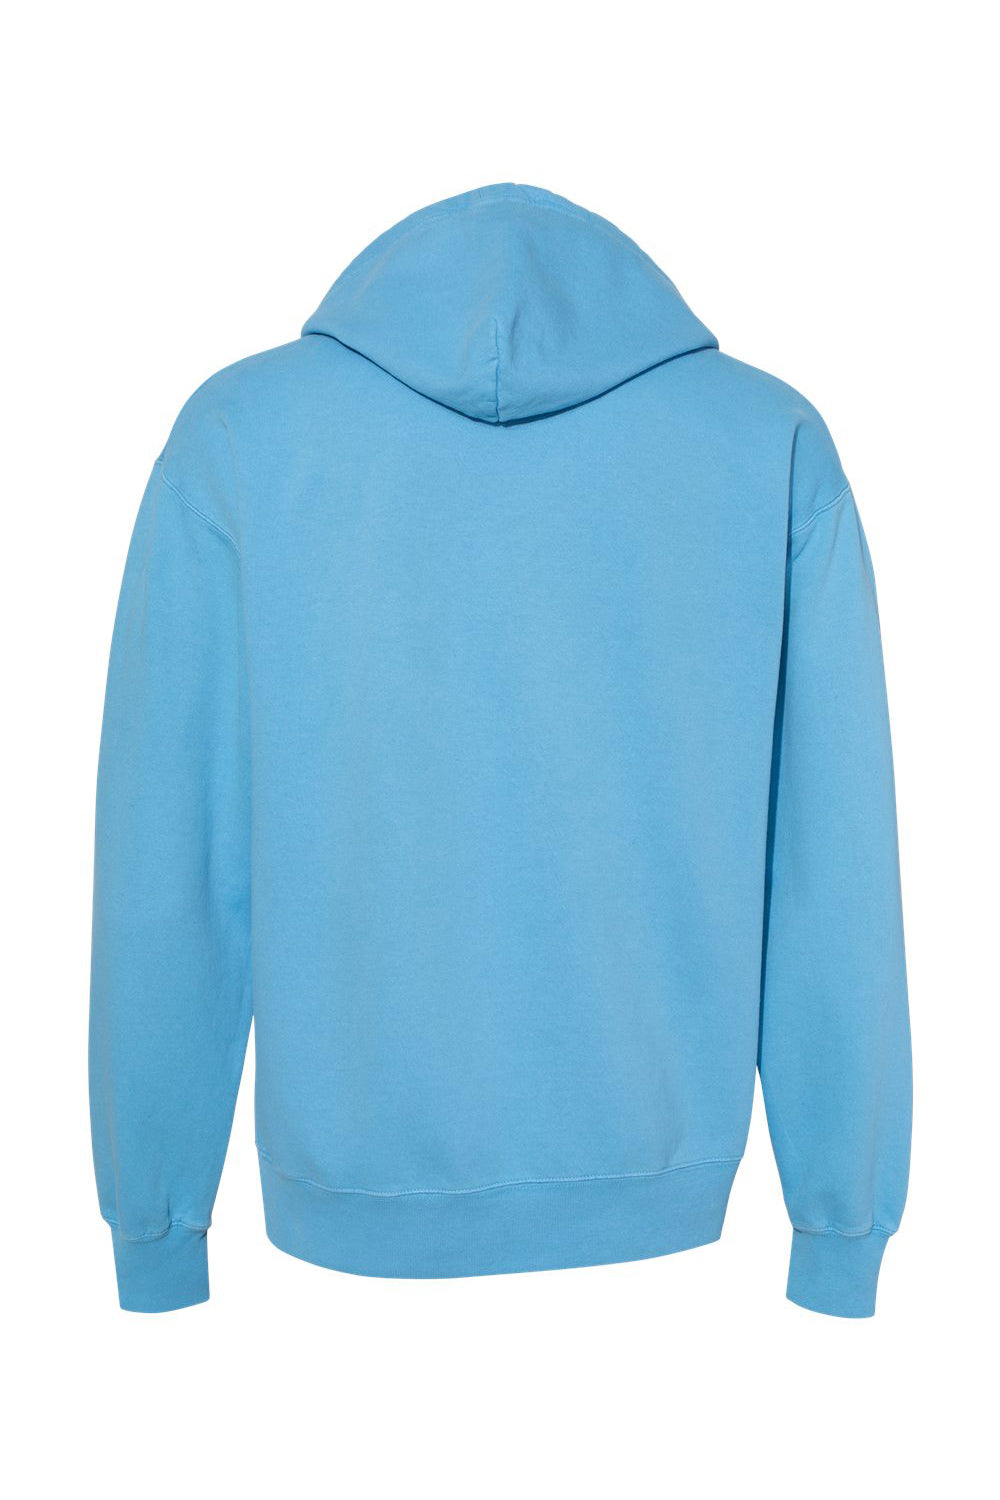 Champion CD450 Mens Garment Dyed Hooded Sweatshirt Hoodie Delicate Blue Flat Back